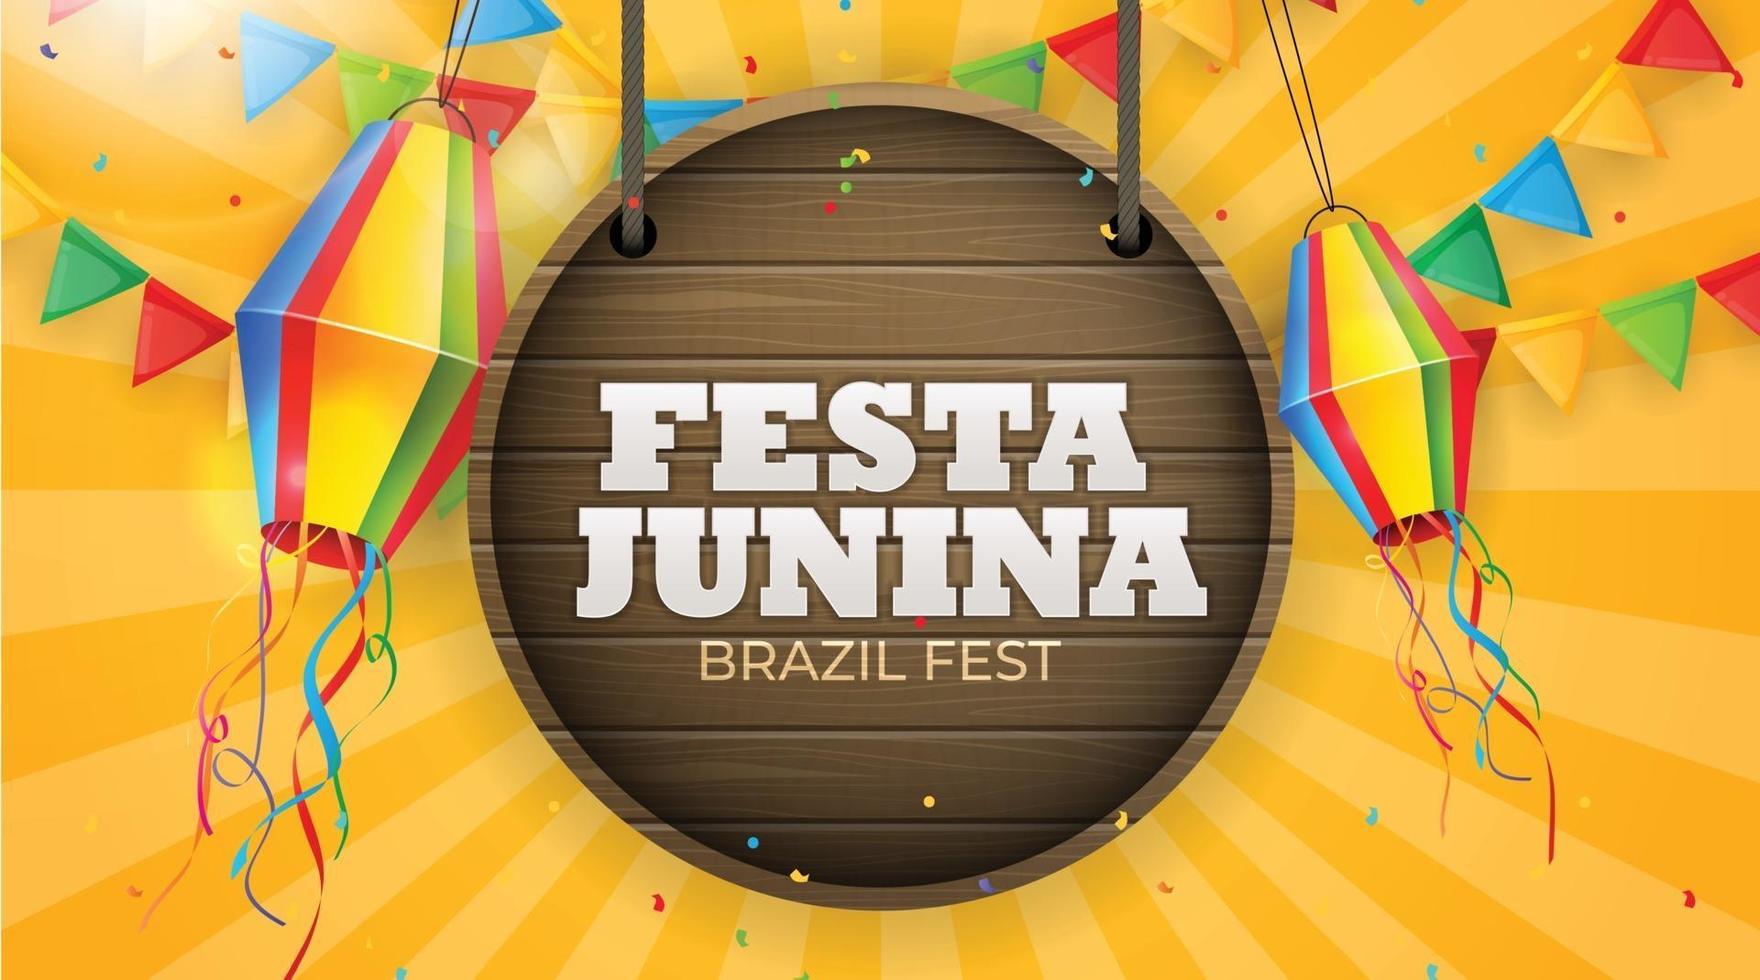 Festa Junina Background with Party Flags. Brazil June Festival vector